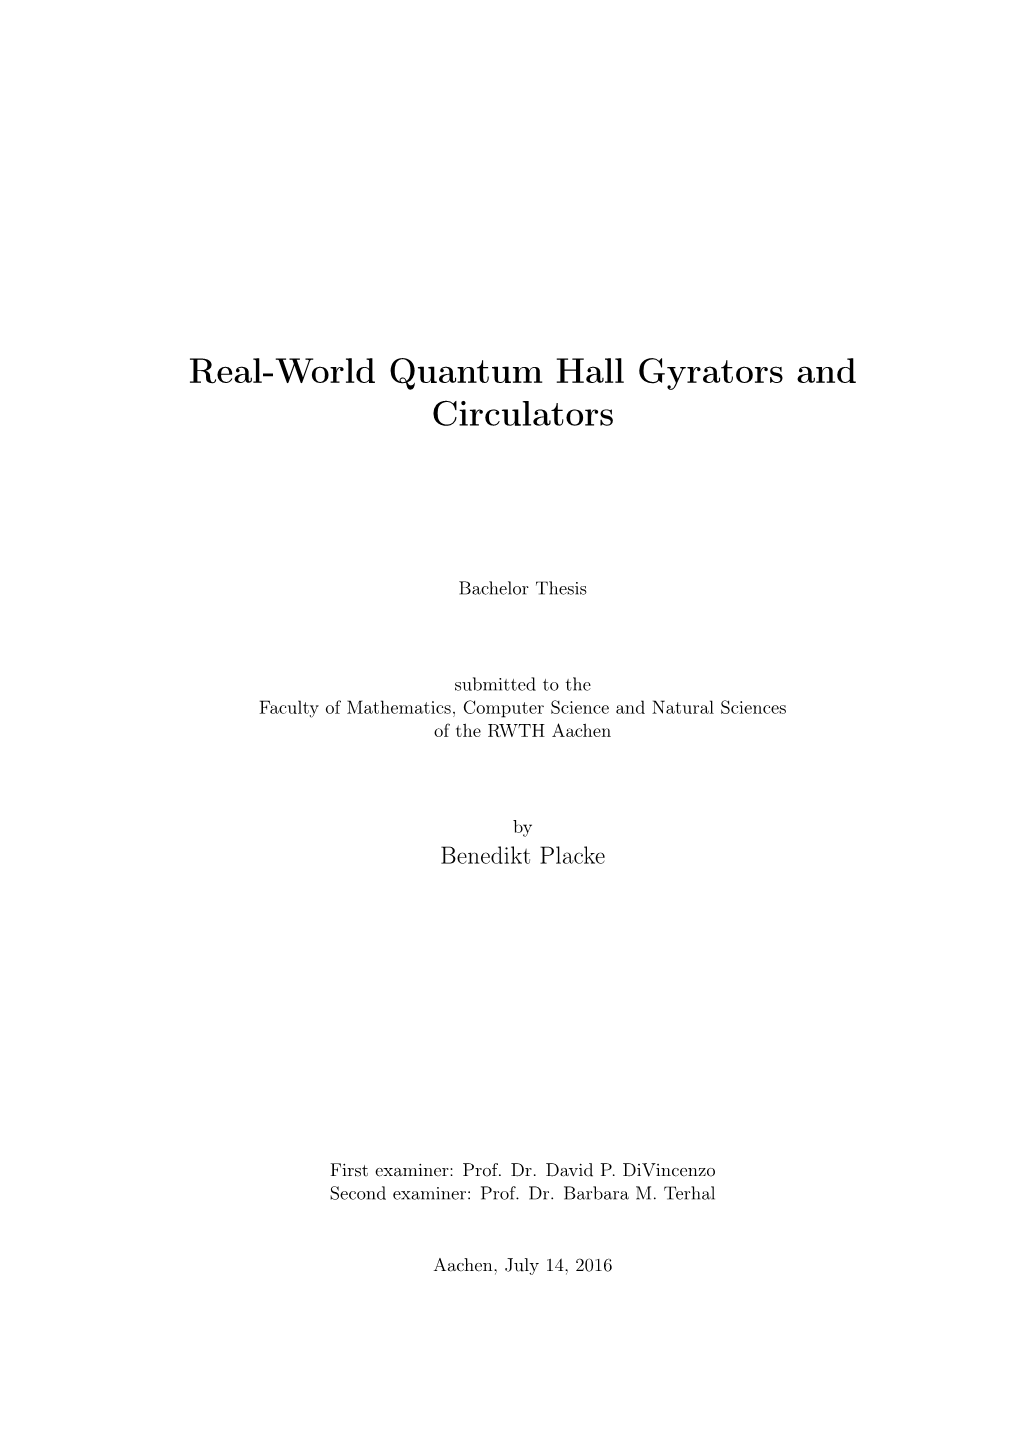 Real-World Quantum Hall Gyrators and Circulators